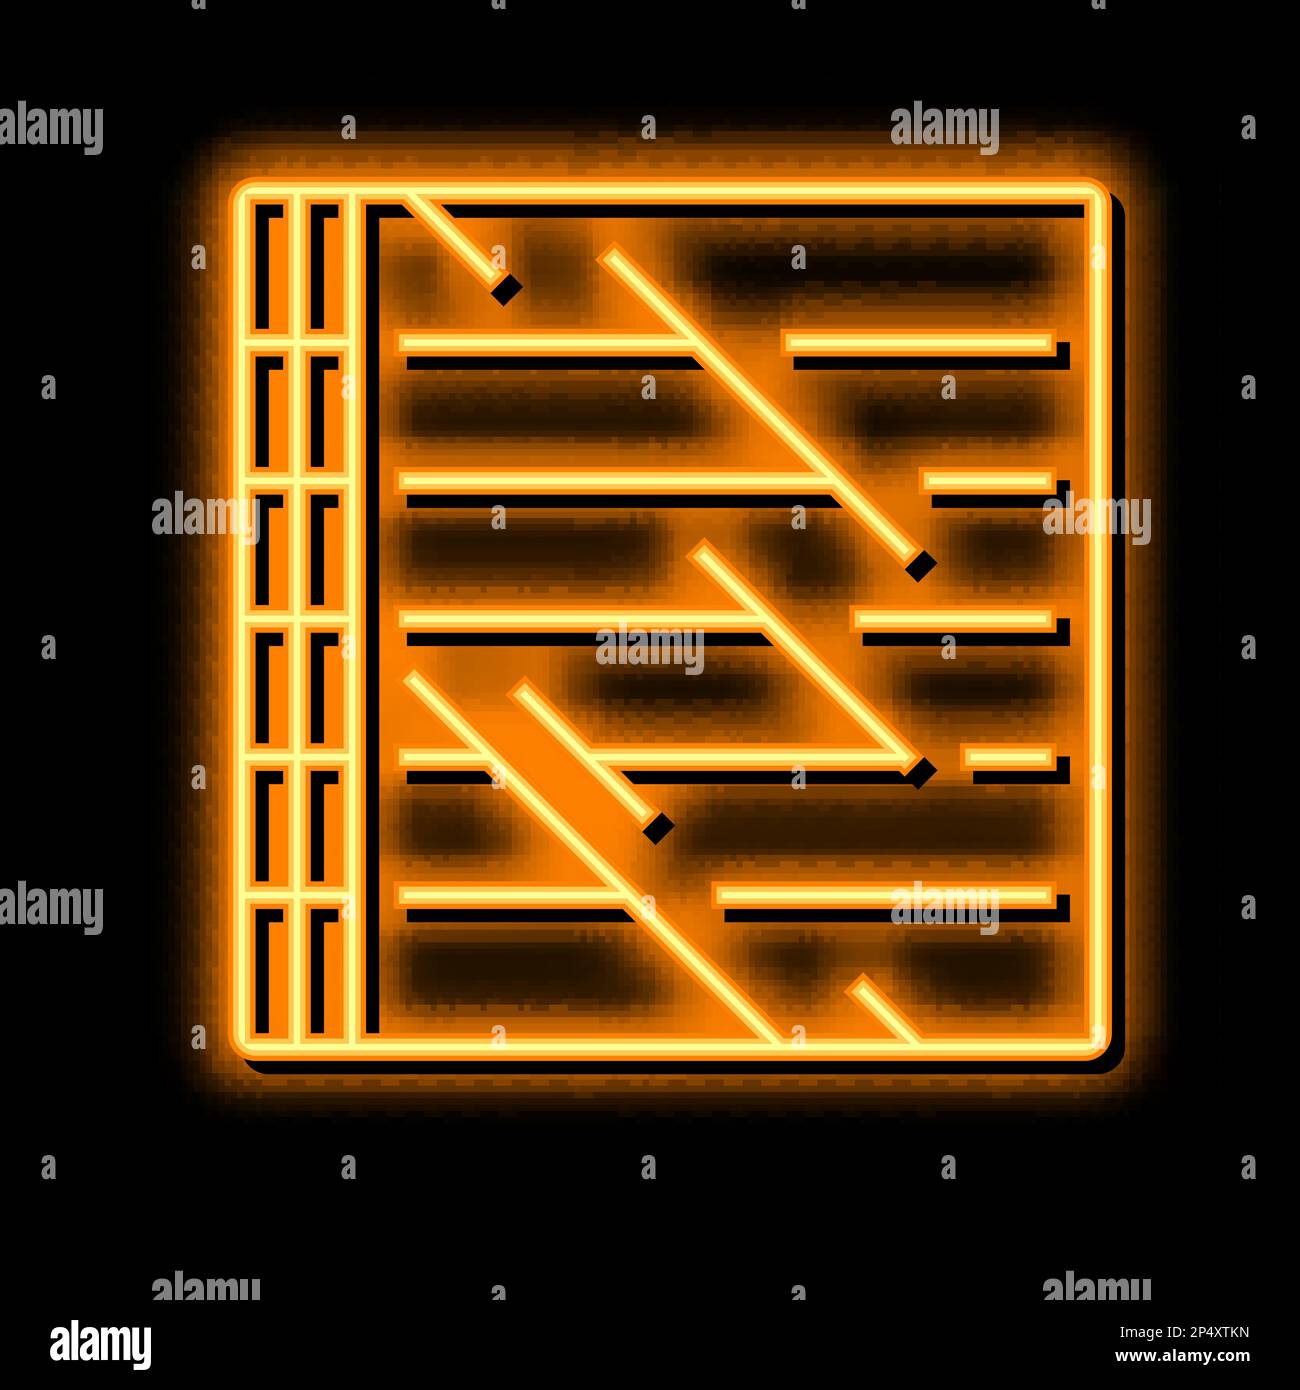 polycarbonate thermoplastic neon glow icon illustration Stock Vector